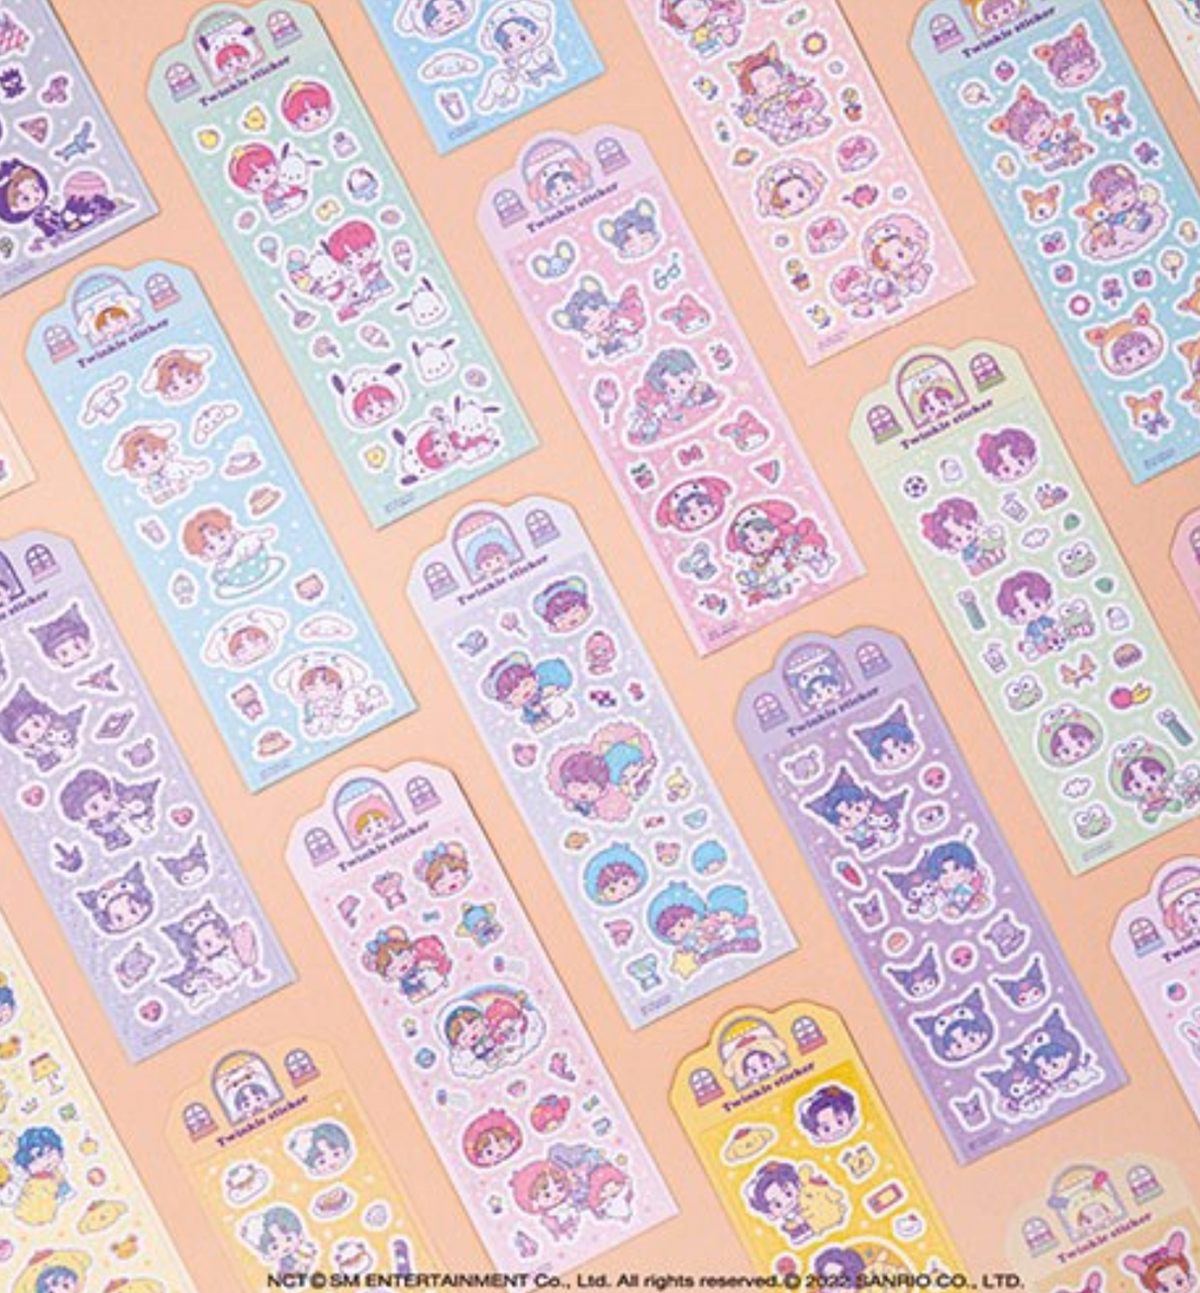 NCT & SANRIO Twinkle Sticker [22 Designs]